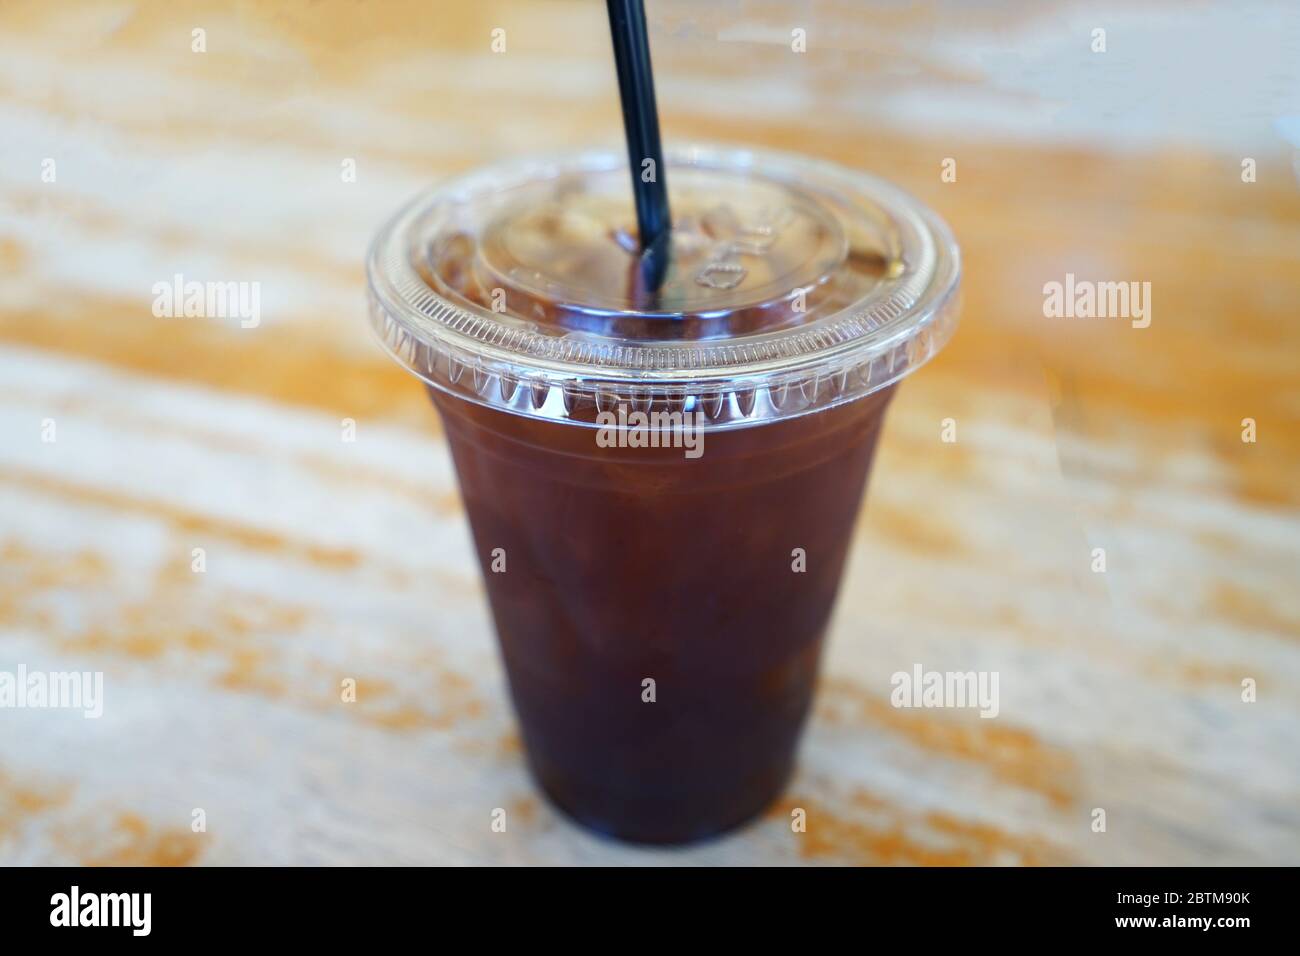 https://c8.alamy.com/comp/2BTM90K/close-up-take-away-plastic-cup-of-iced-black-coffee-on-wooden-table-2BTM90K.jpg